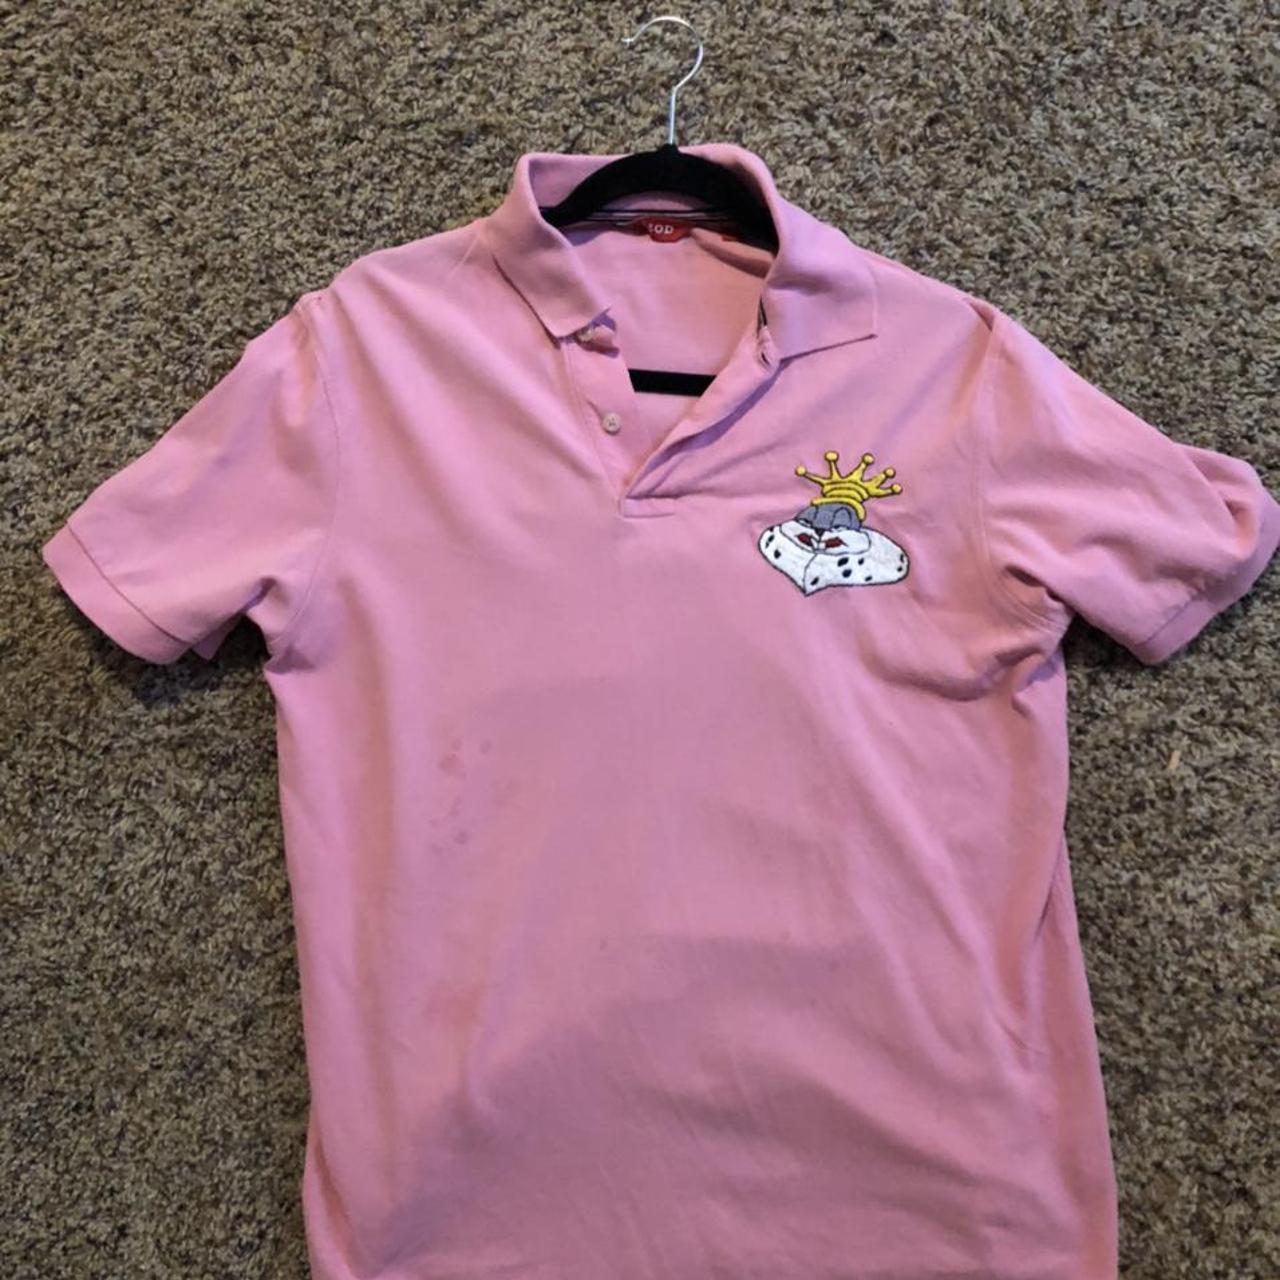 Izod Men's Pink Polo-shirts | Depop